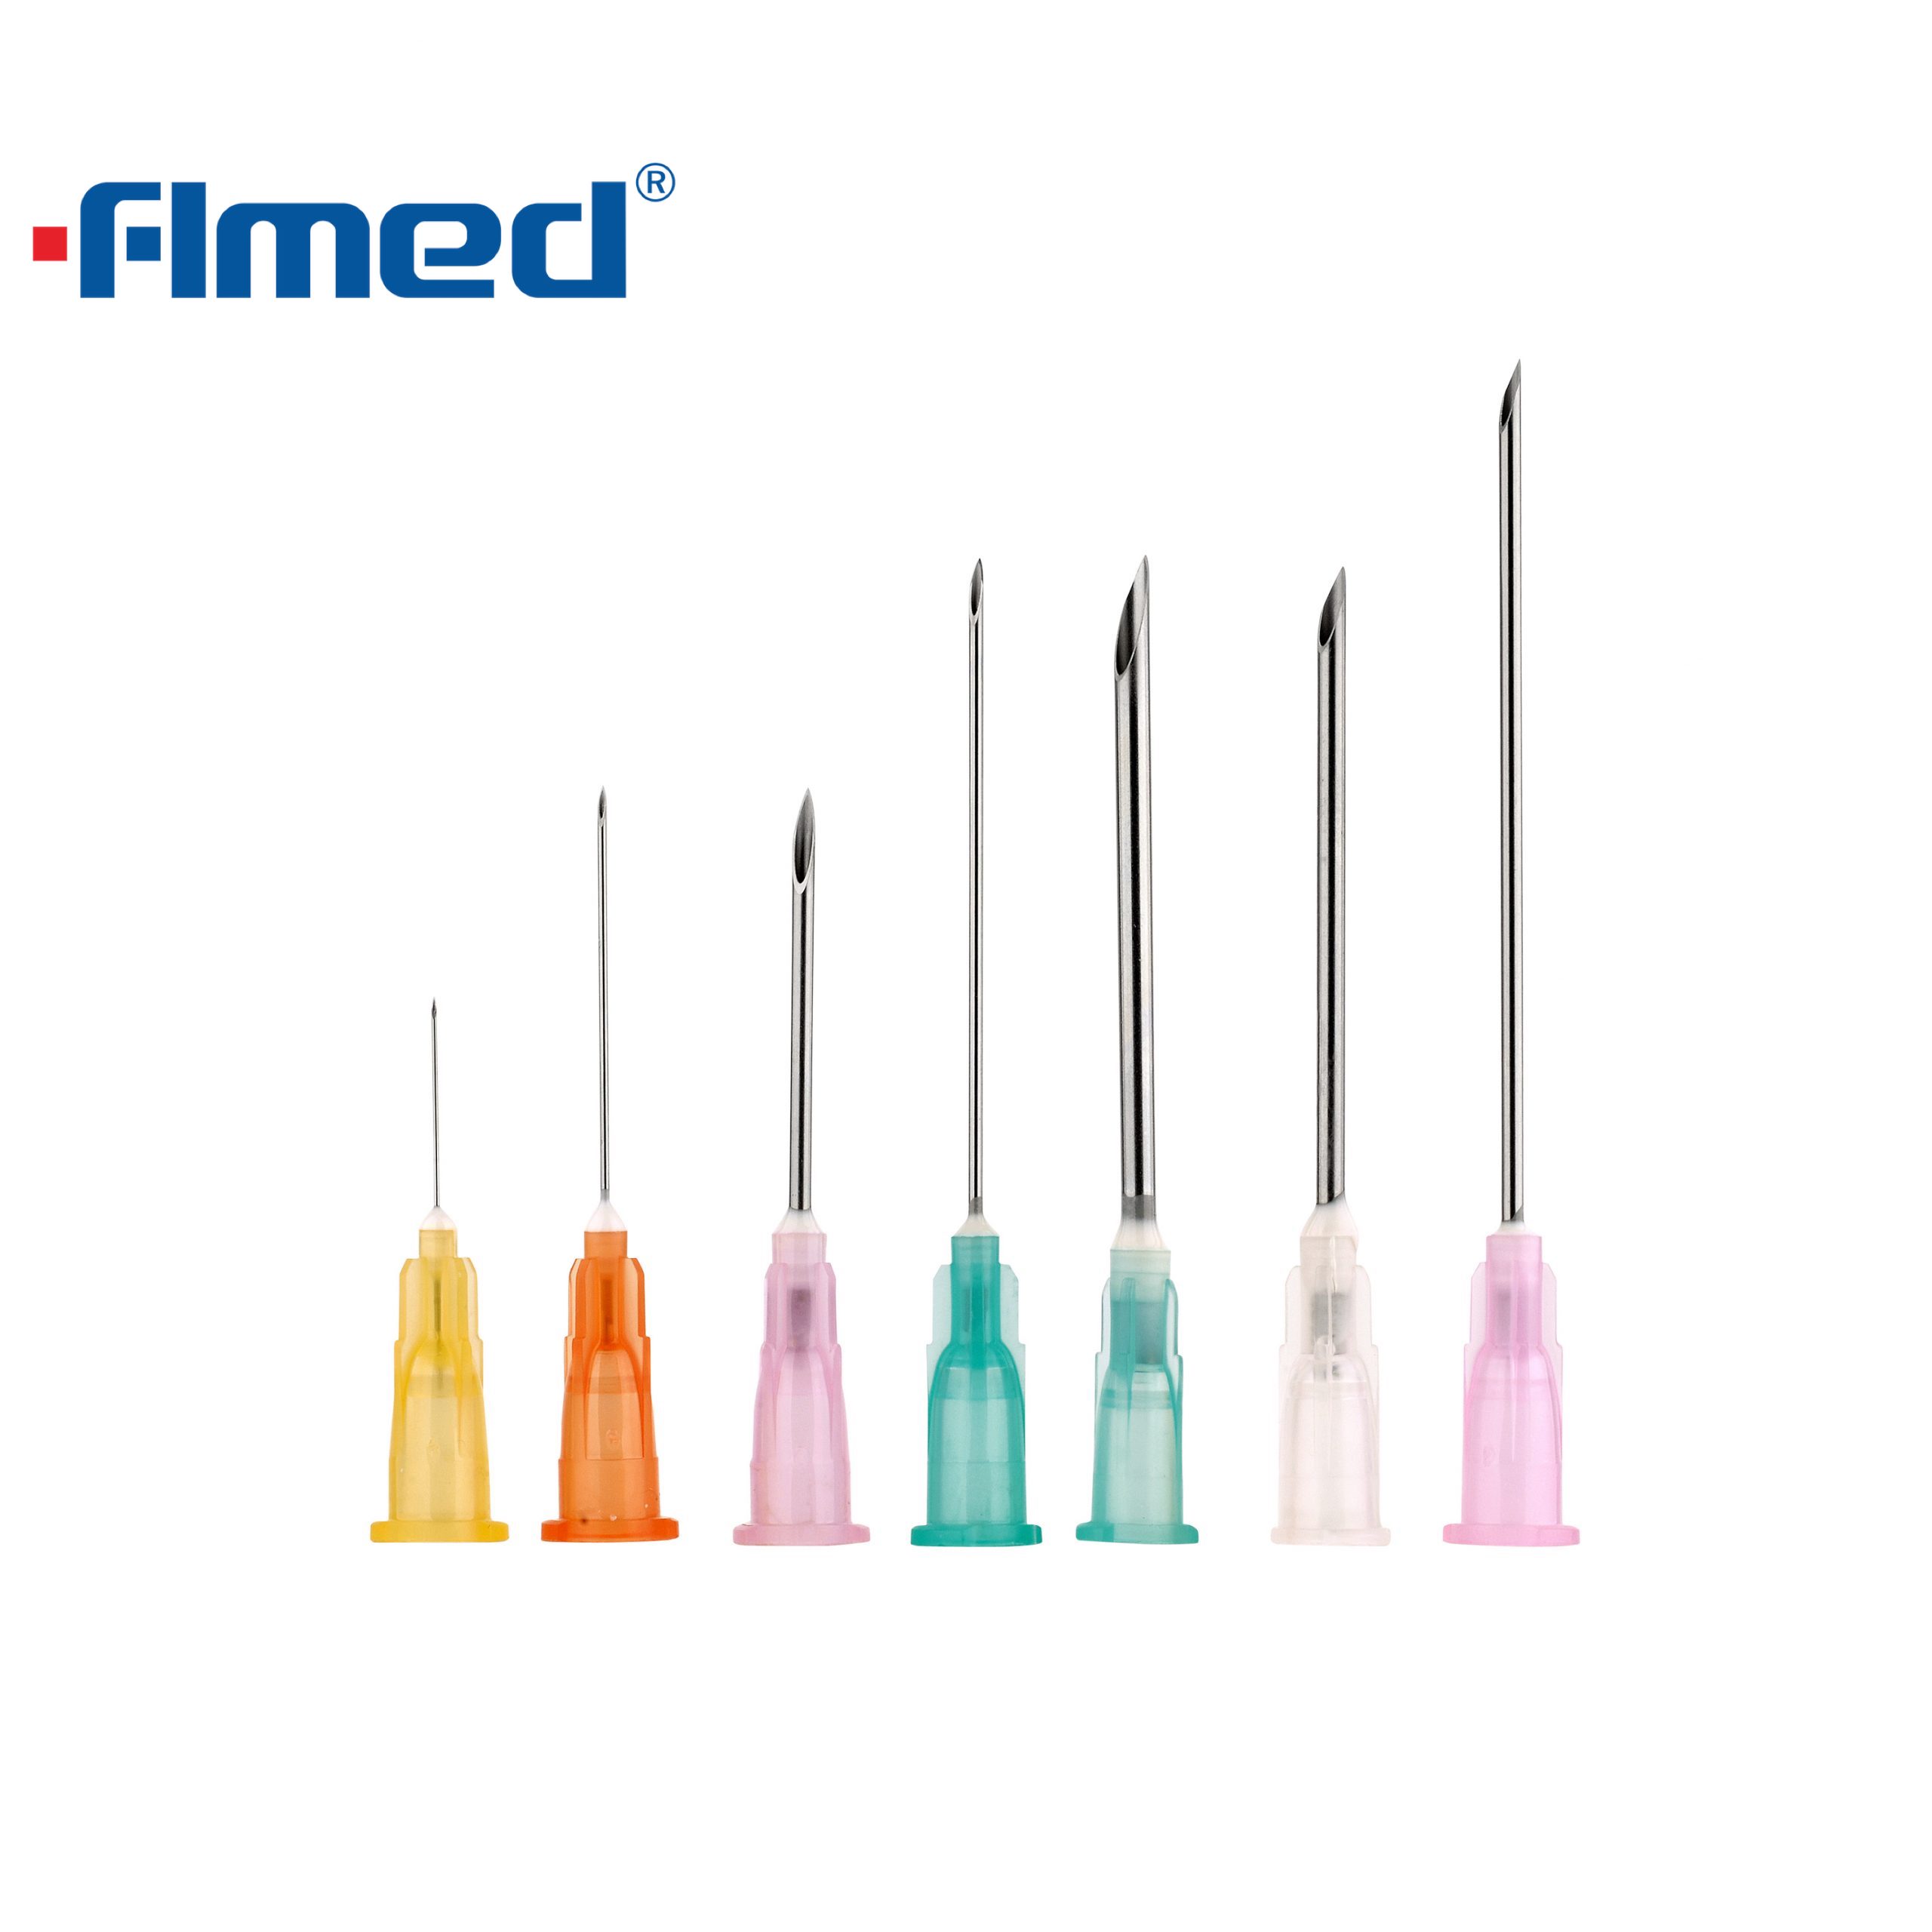 Disposable Medical Hypodermic Needles 16G-30G